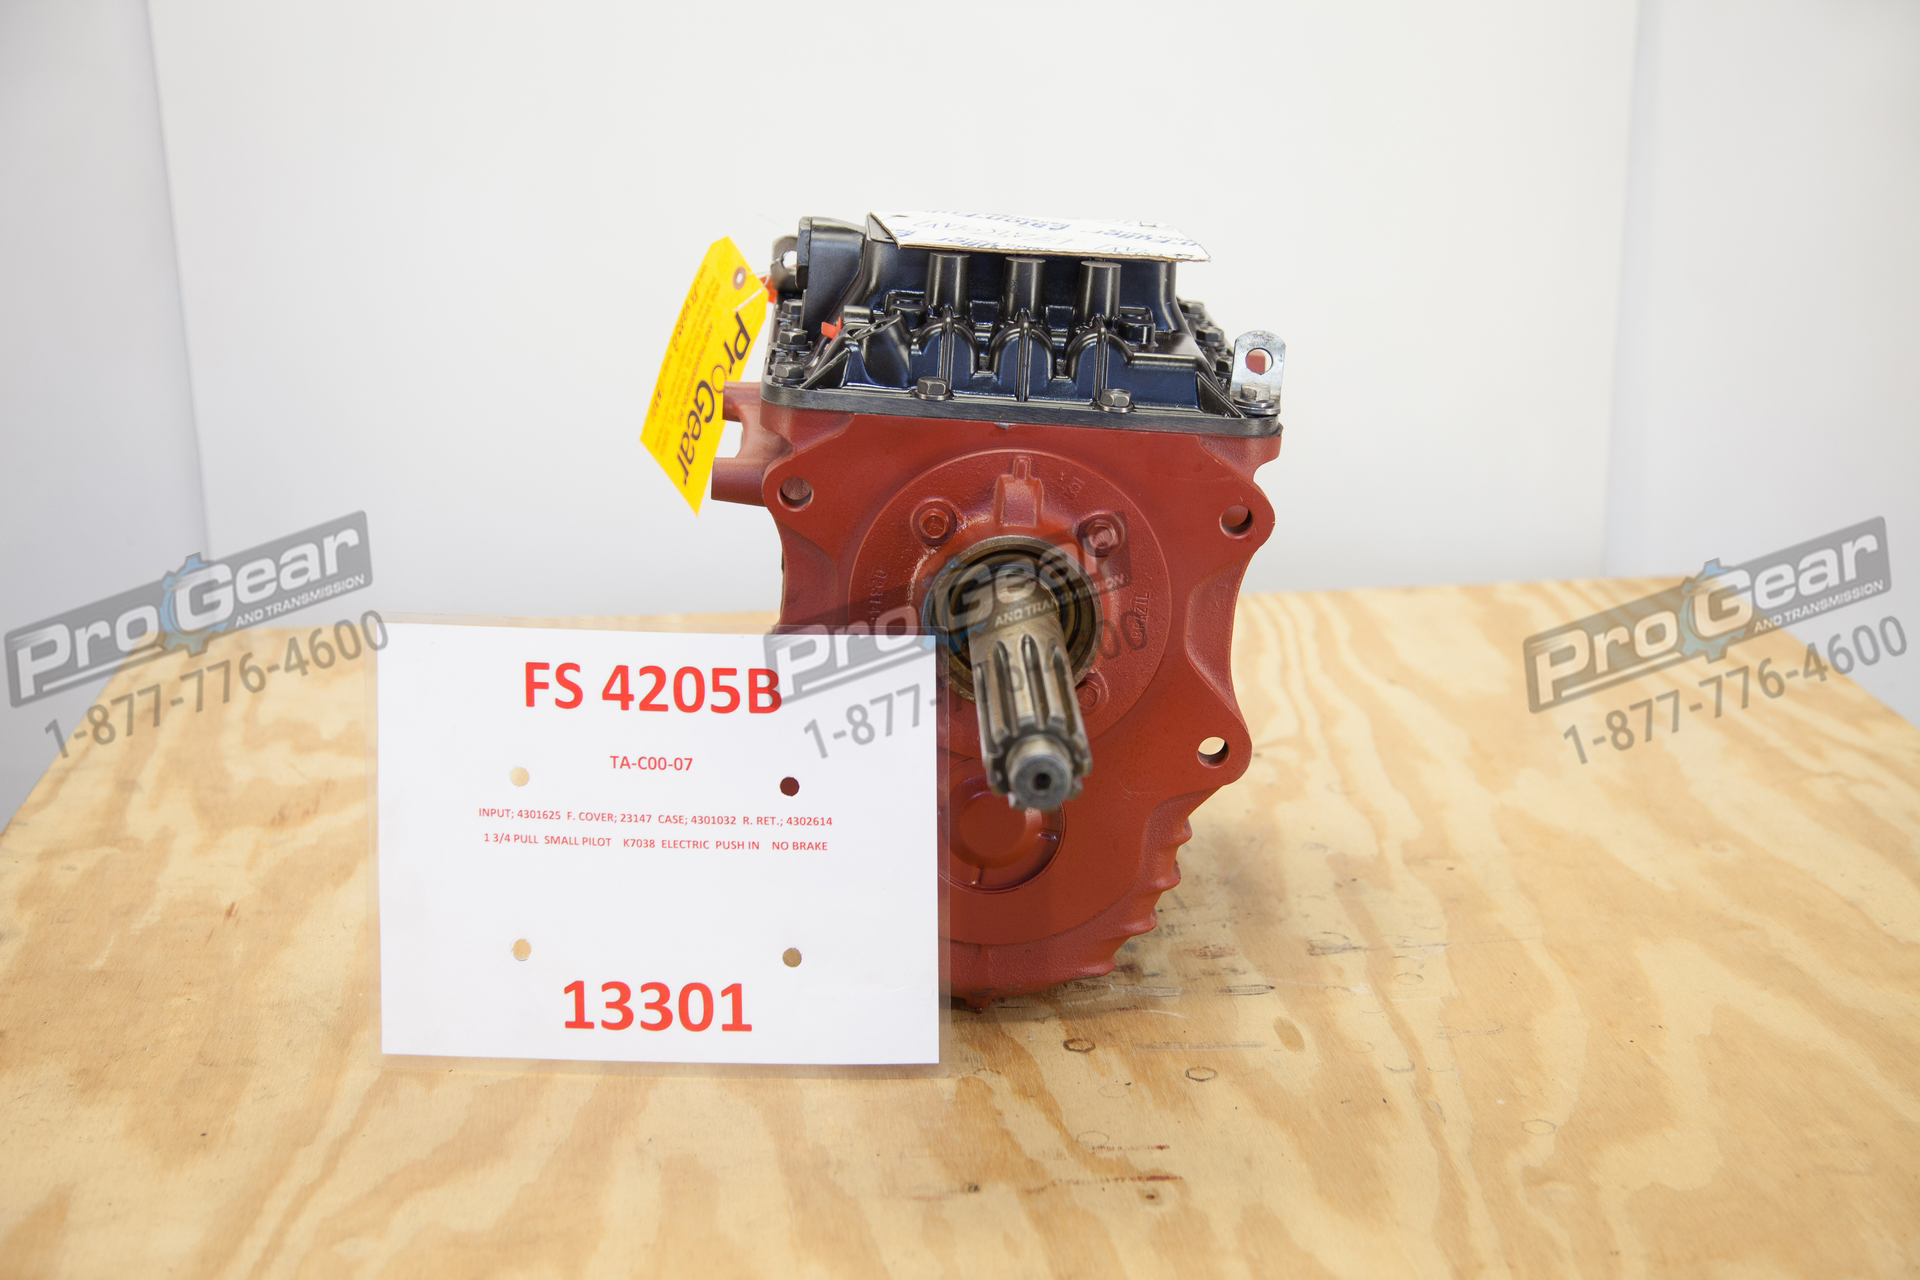 Eaton Fuller RTX-12510 transmission for sale